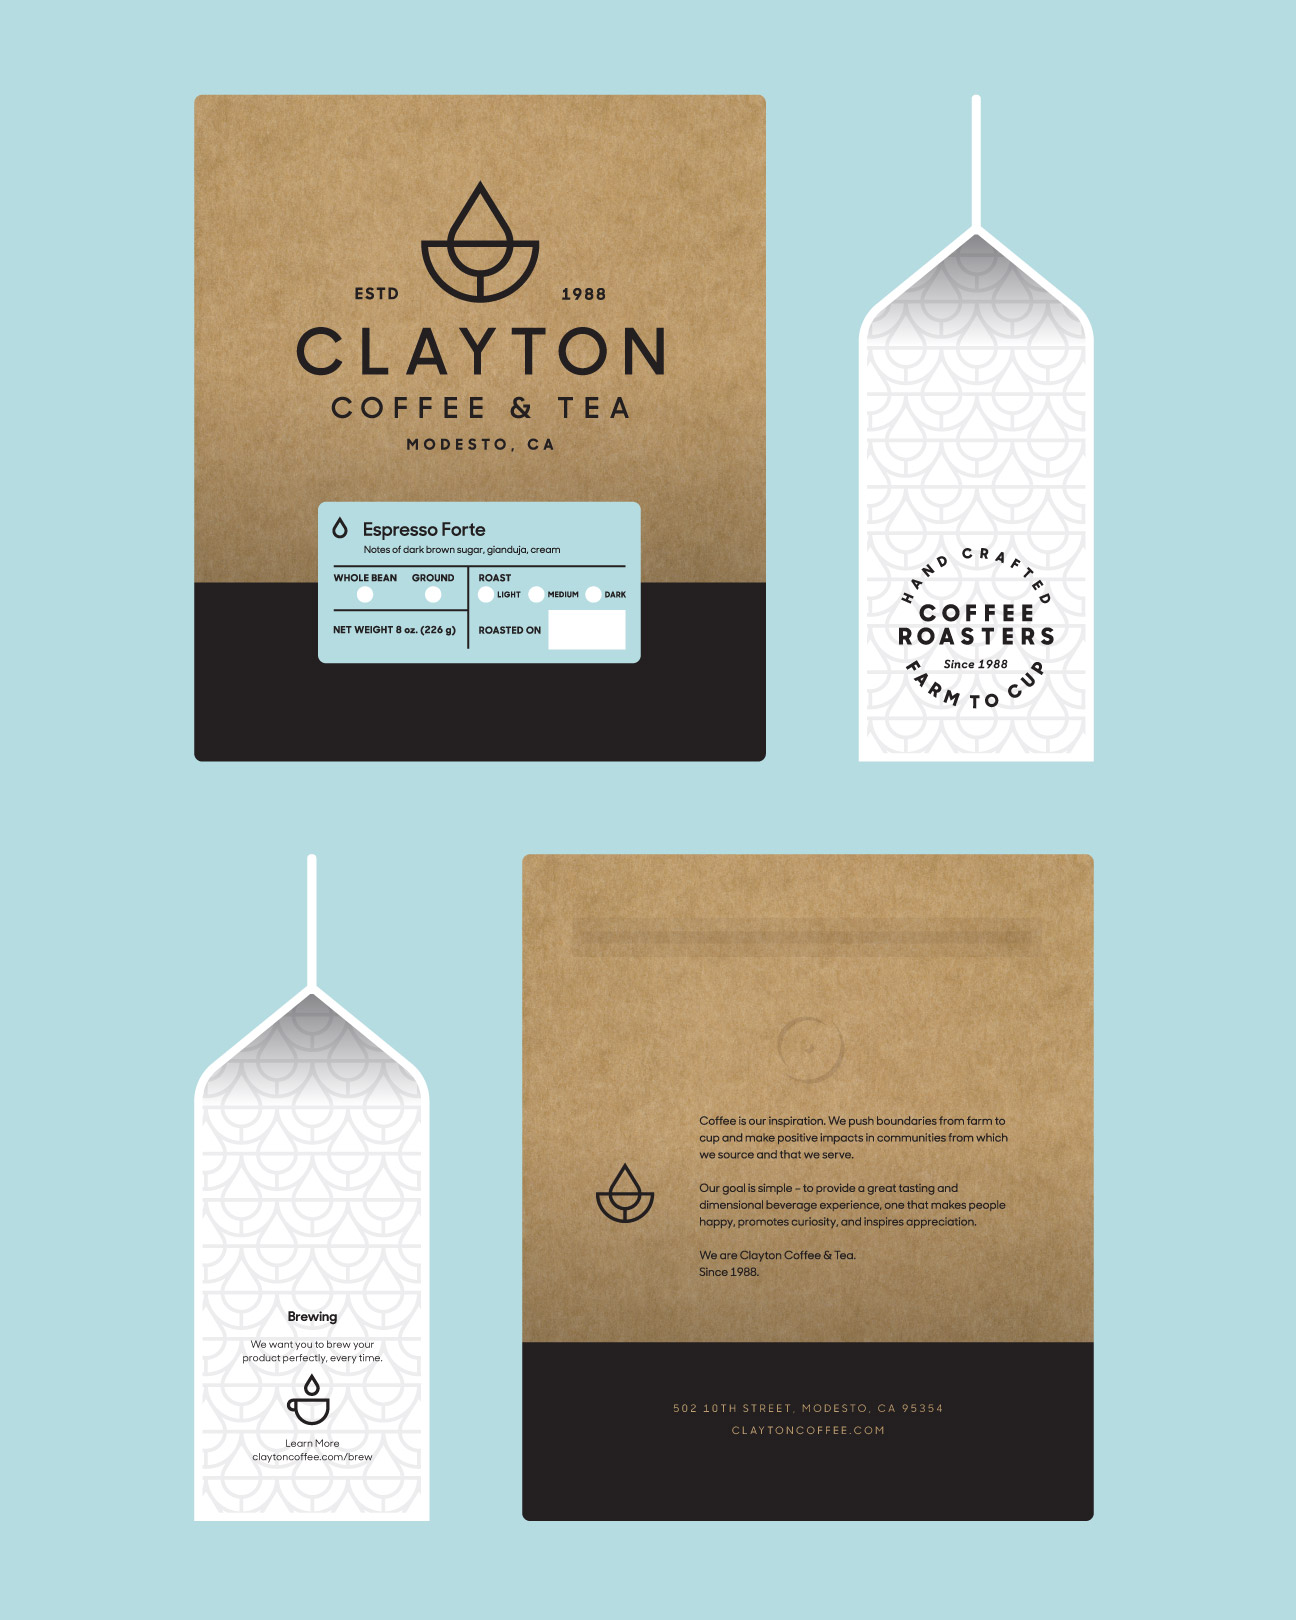 Clayton Coffee & Tea